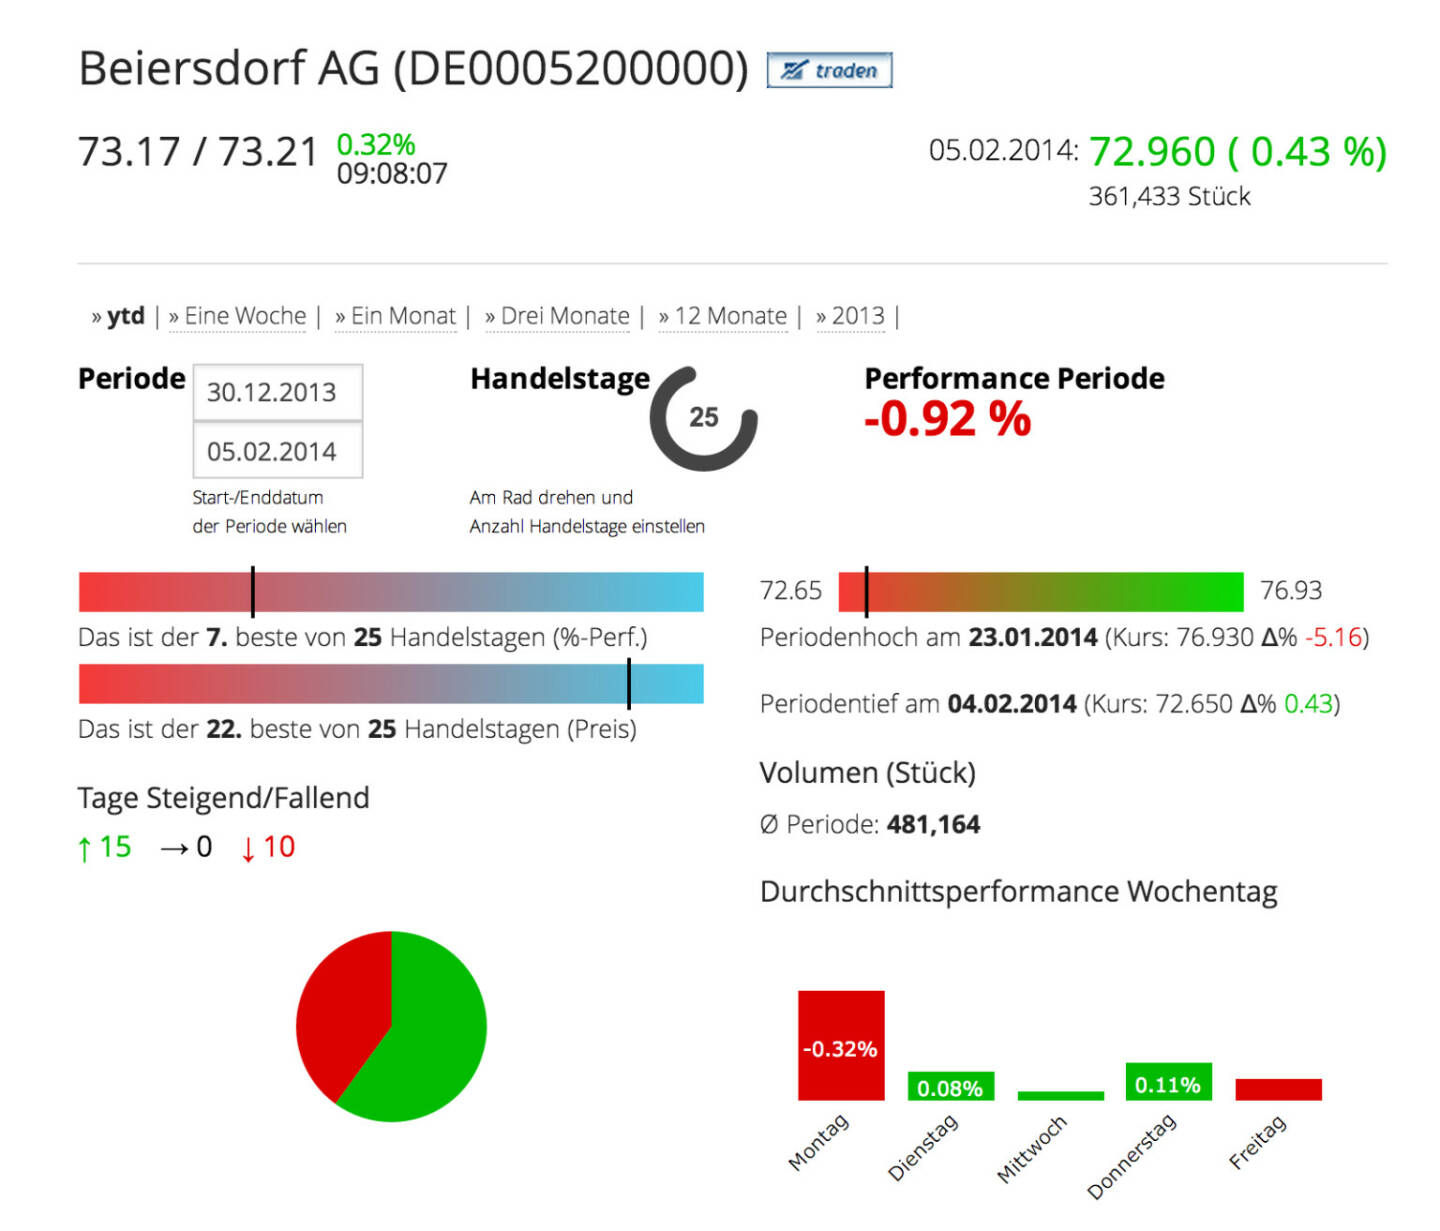 Die Beiersdorf AG im Börse Social Network http://boerse-social.com/launch/aktie/beiersdorf_ag